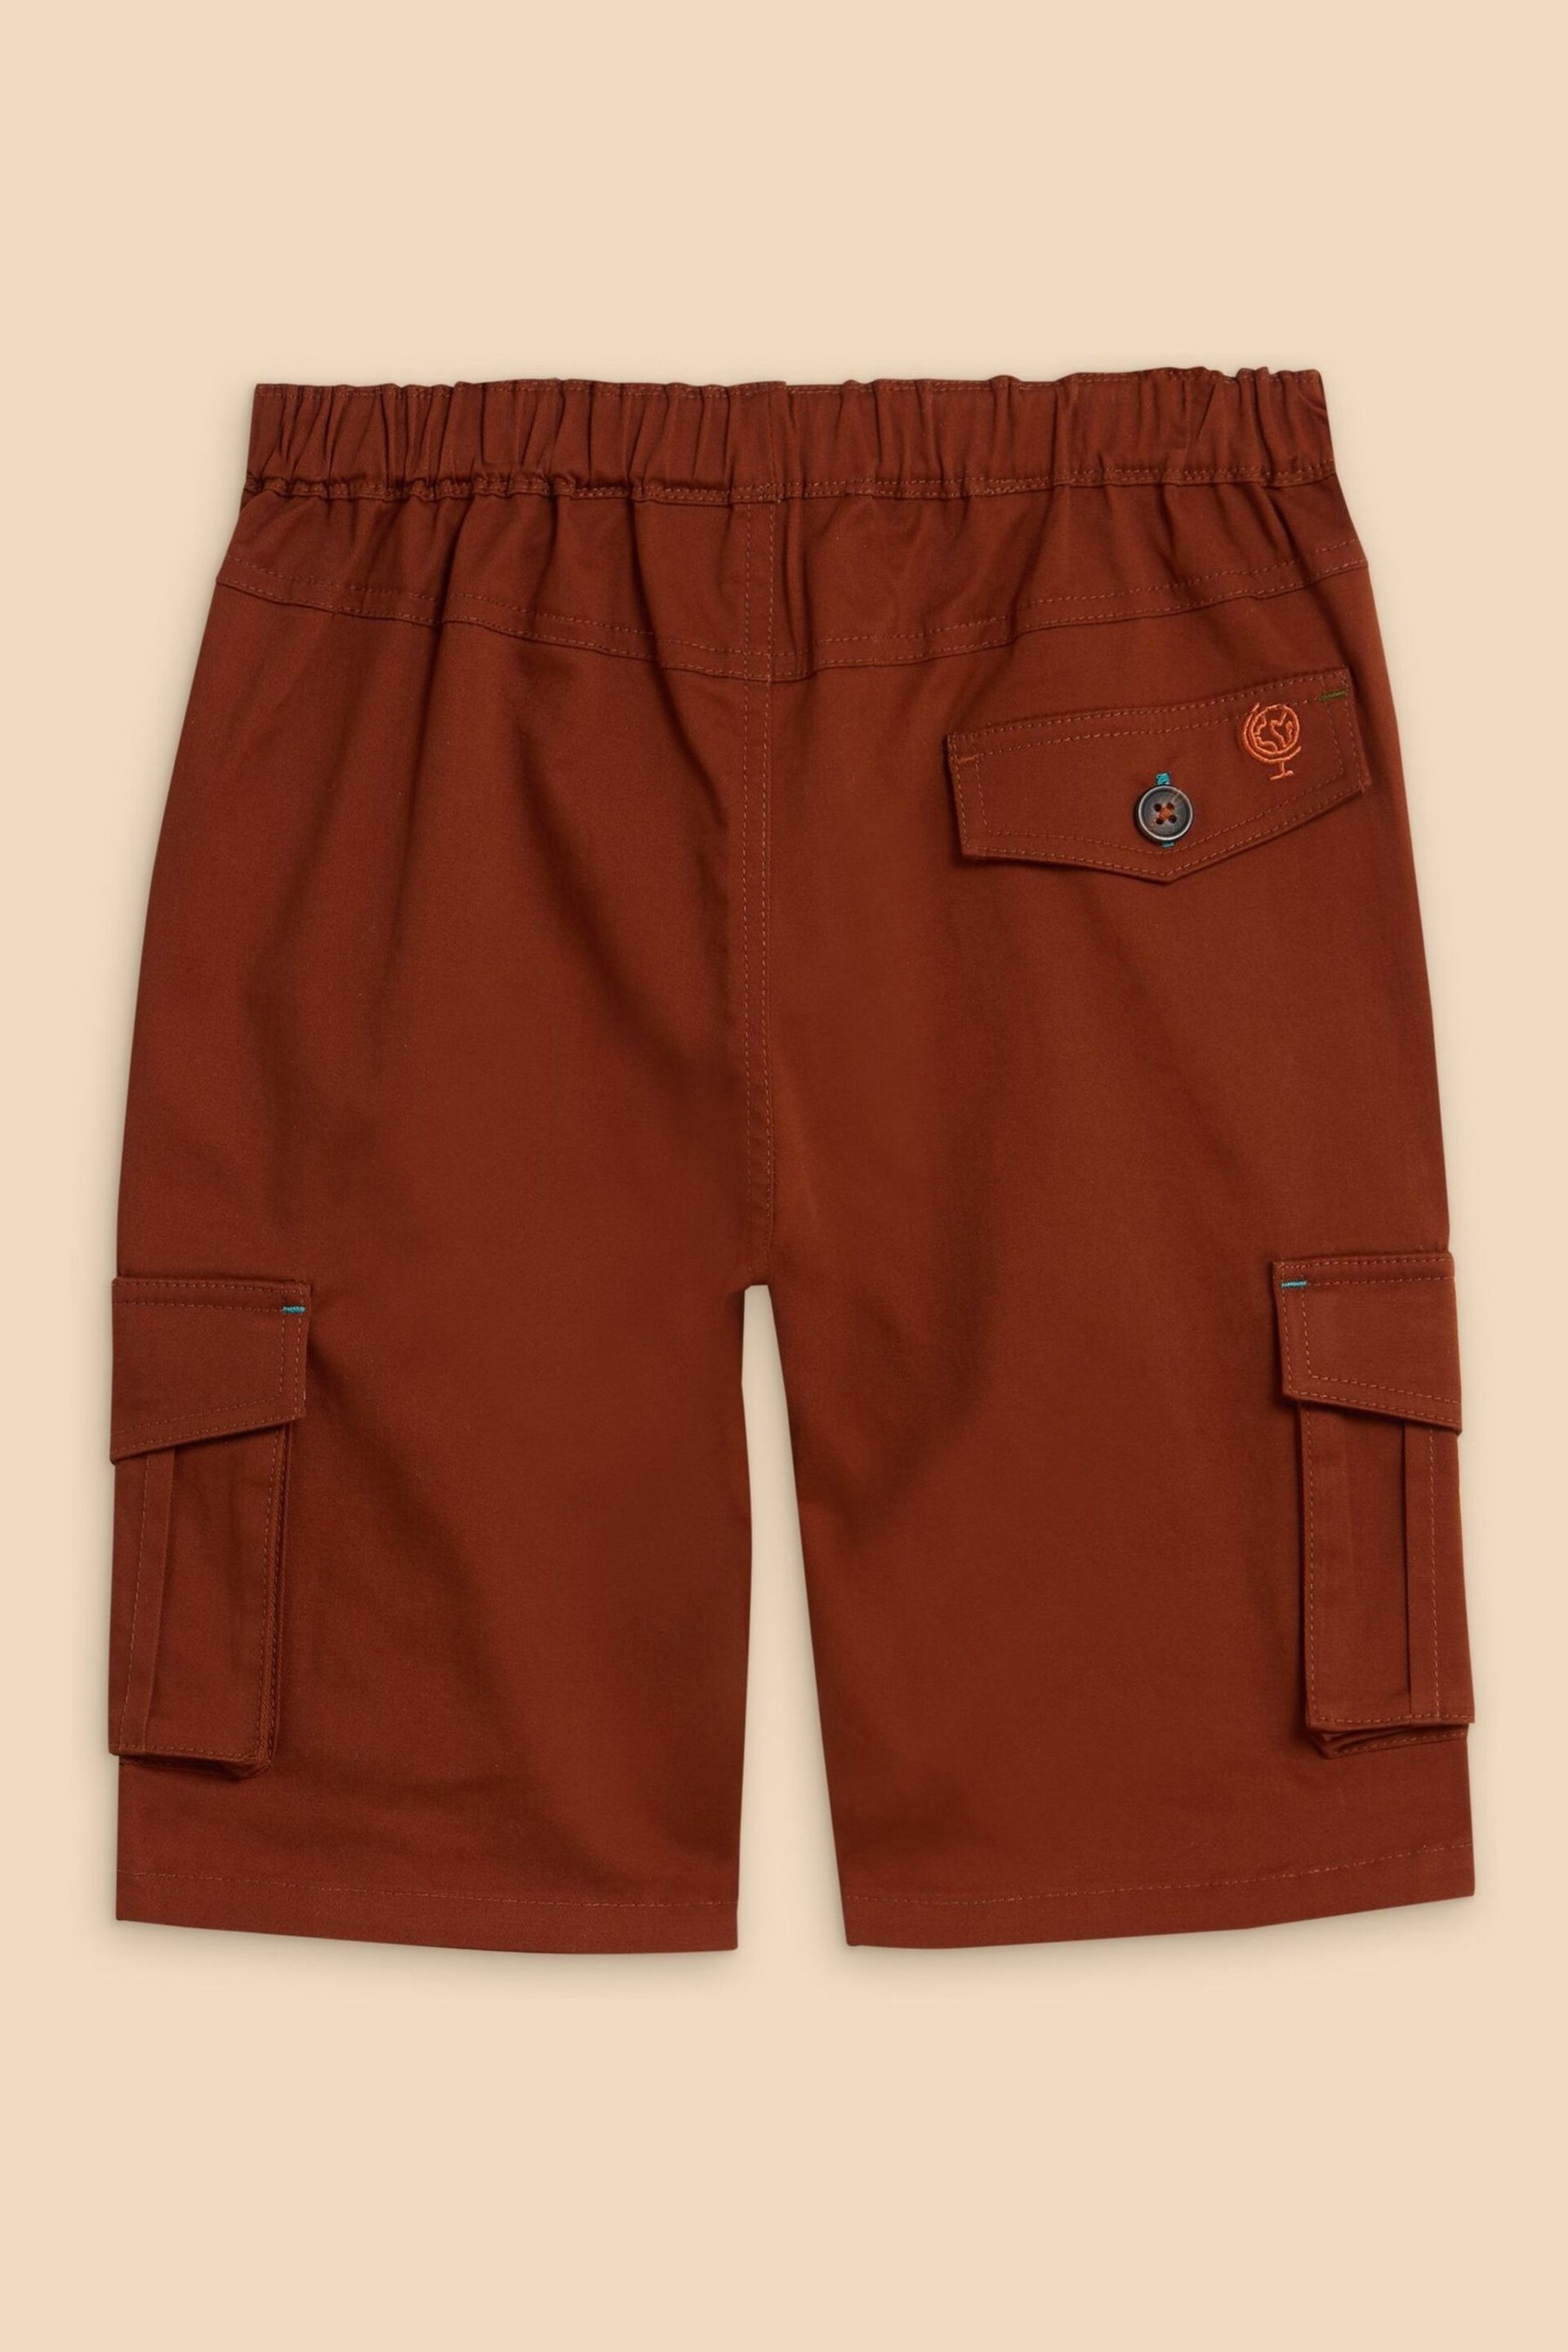 White Stuff Brown Carter Cargo Shorts - Image 2 of 3